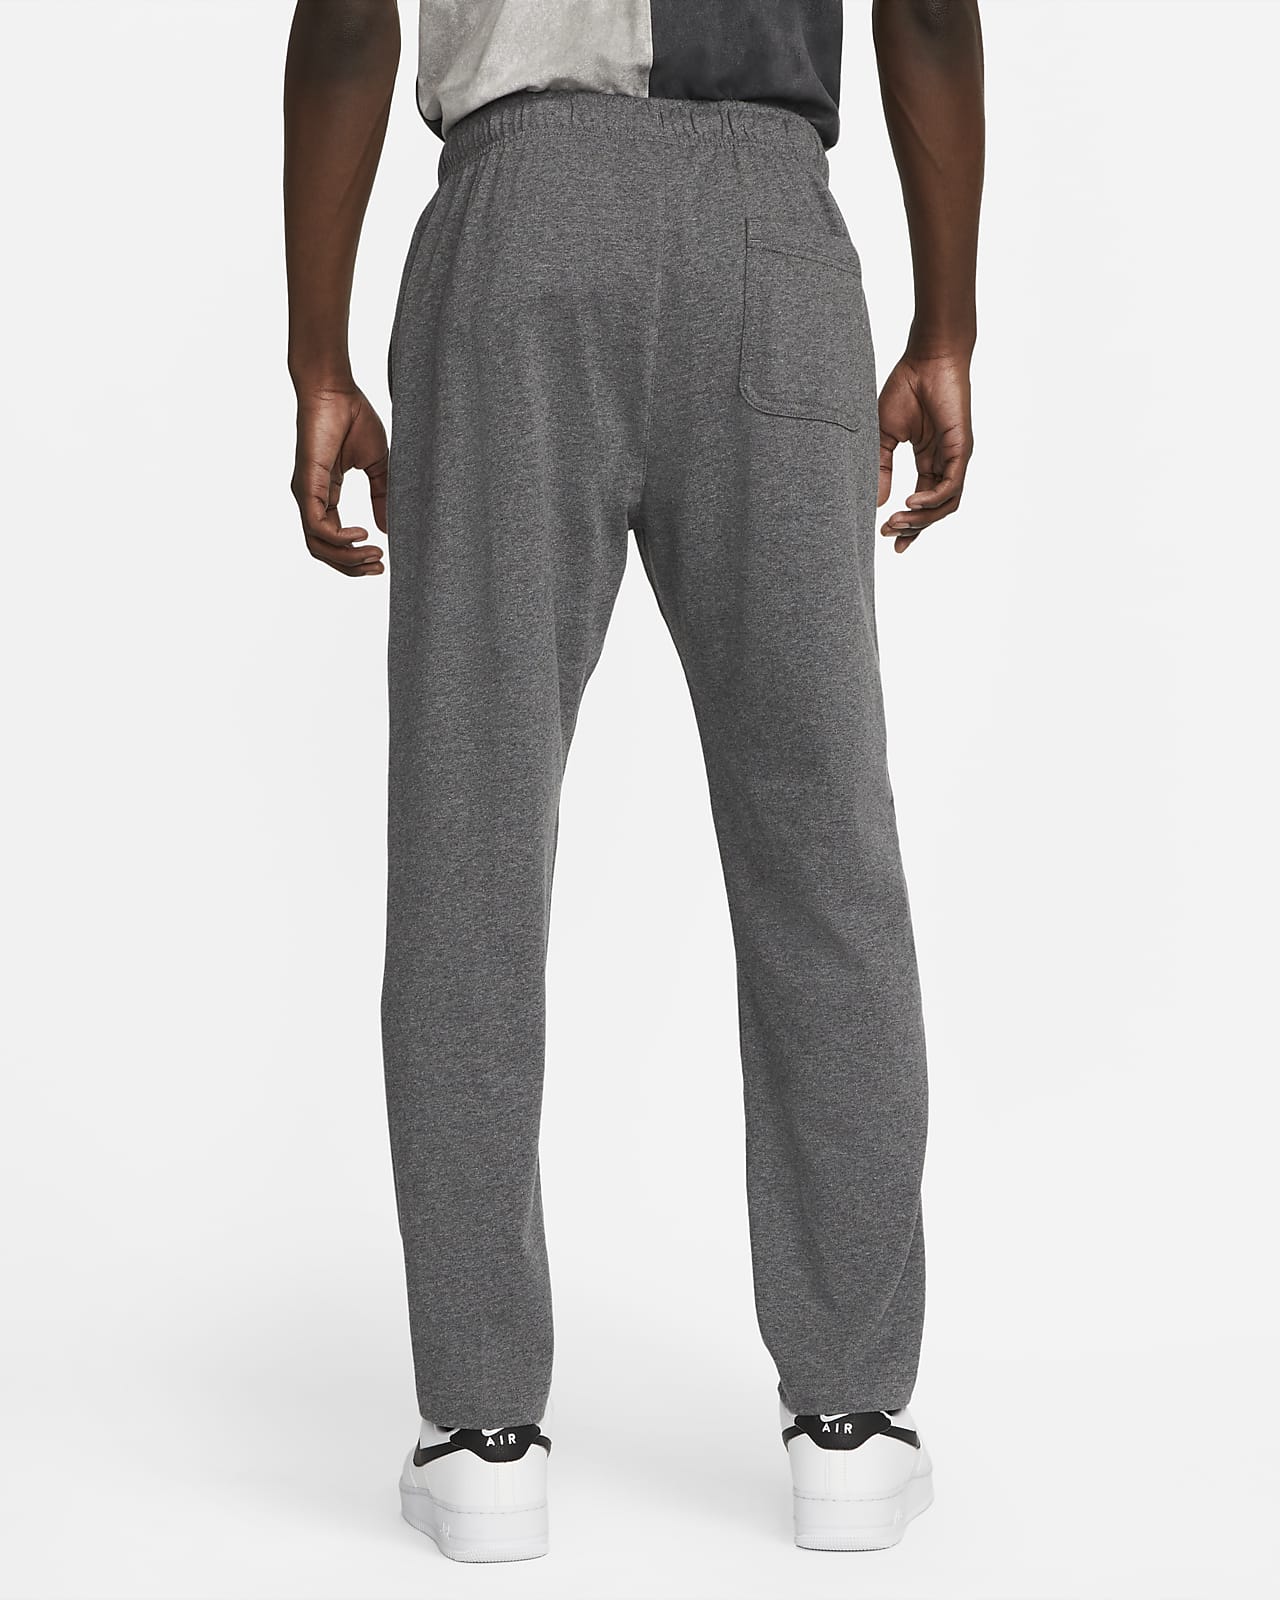 Nike Jersey Pants for Men for sale  eBay